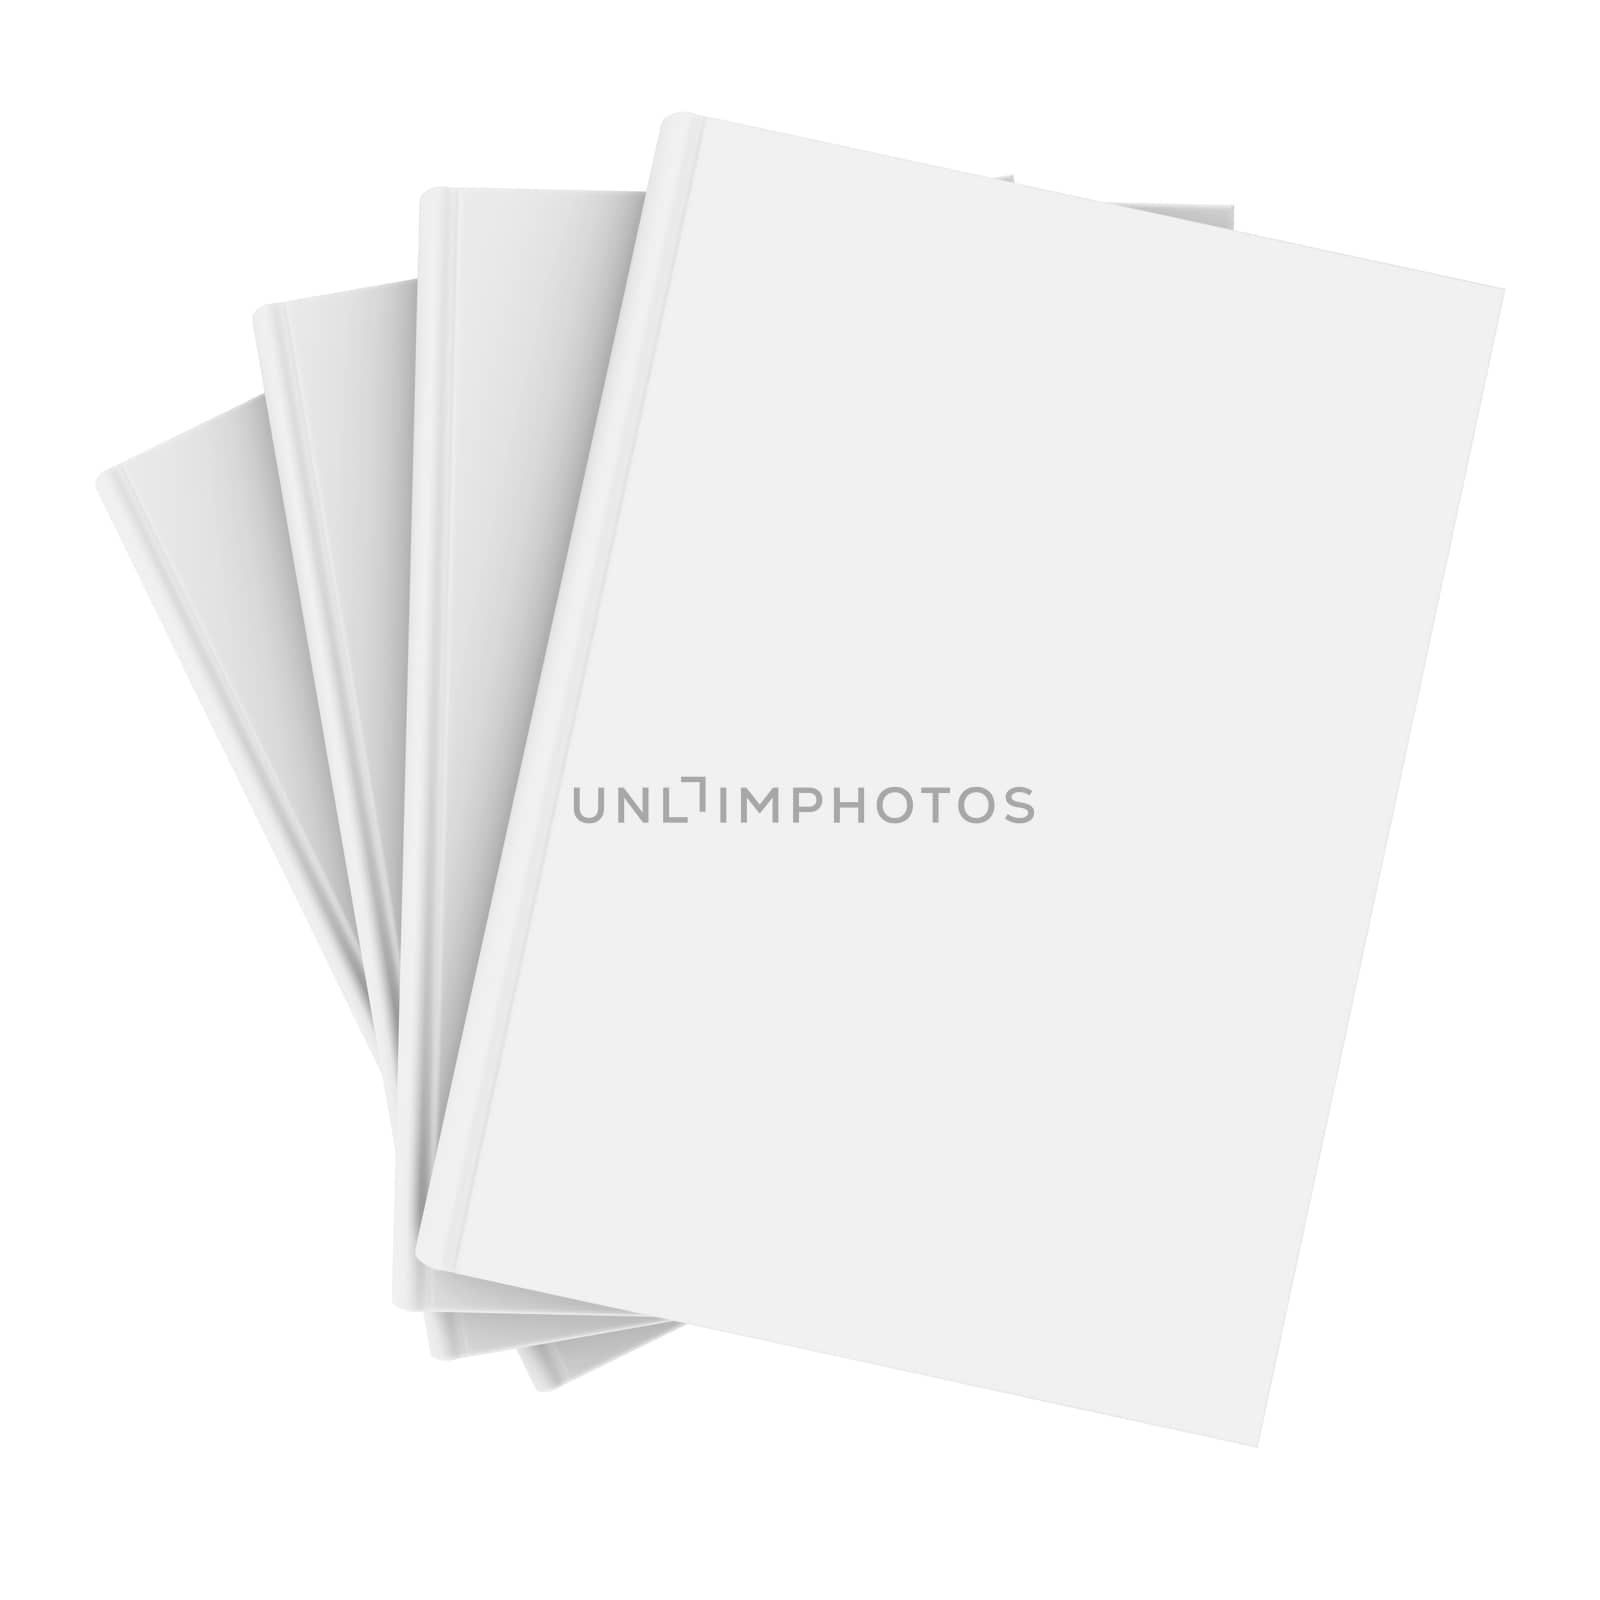 Four white book by cherezoff